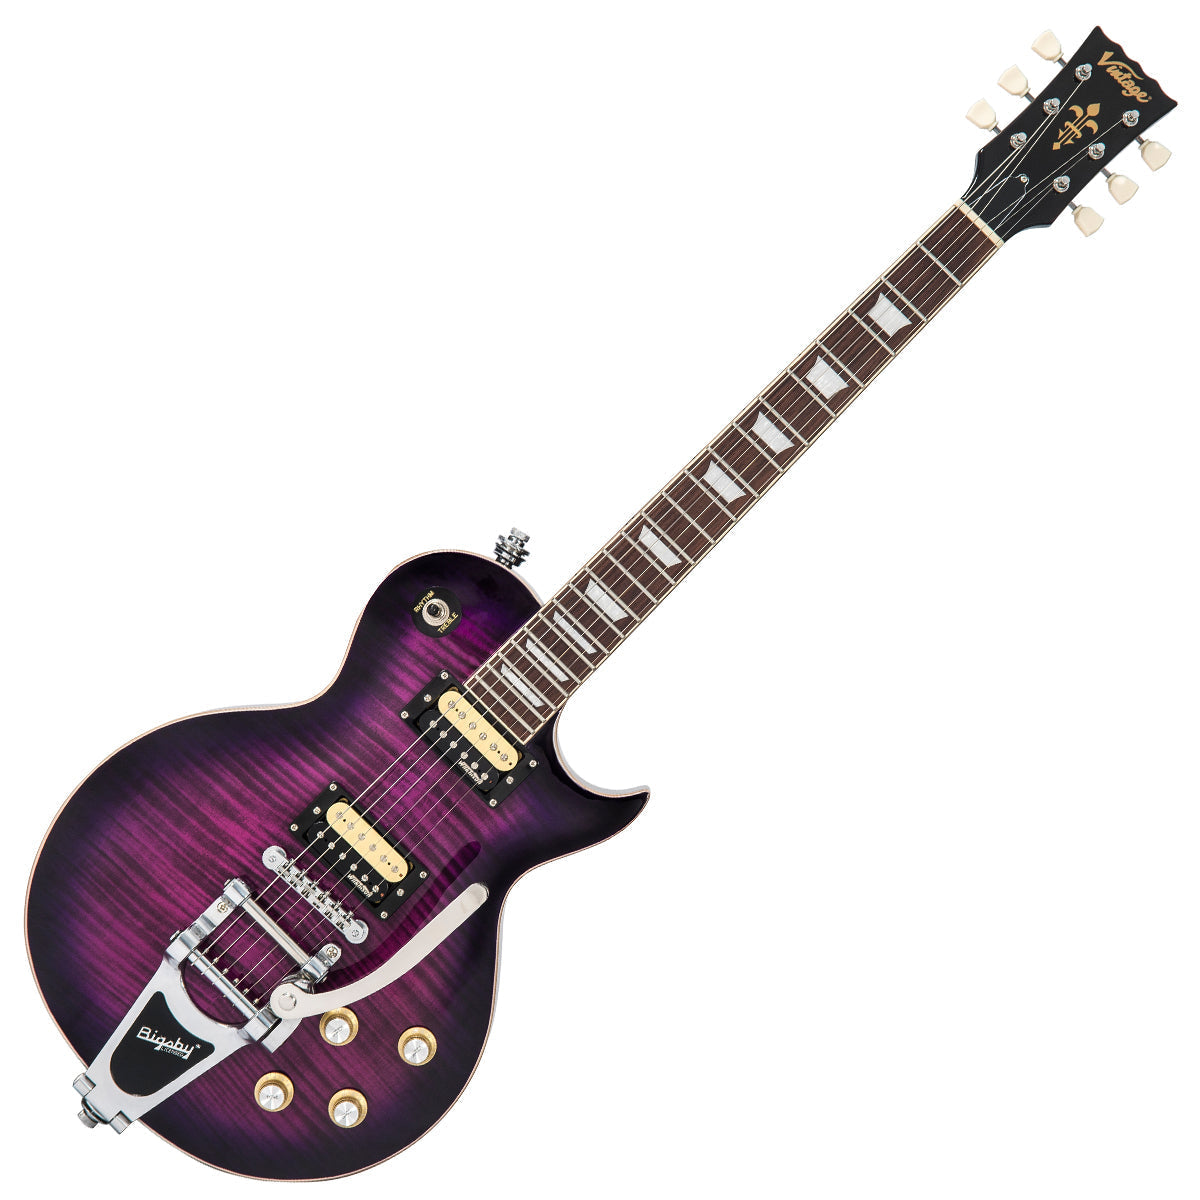 Vintage V100 ReIssued Electric Guitar w/Bigsby ~ Flamed Purpleburst, Electric Guitar for sale at Richards Guitars.